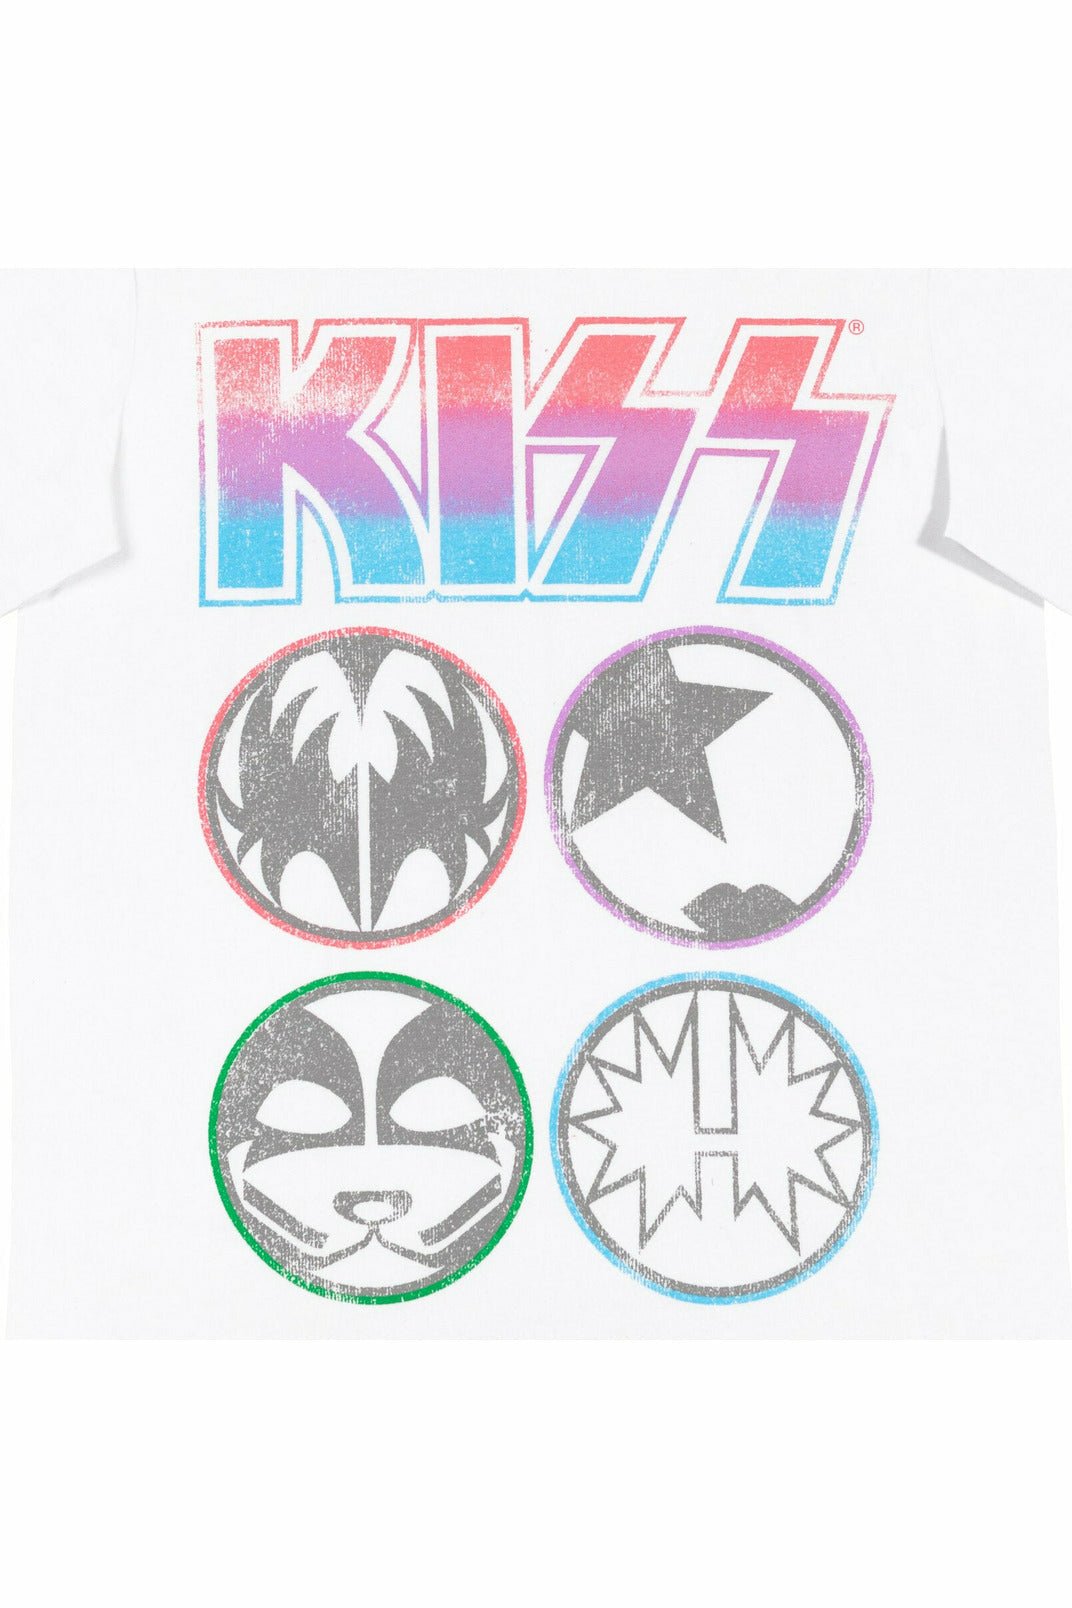 KISS Rock Band 2 Pack Graphic T-Shirt - imagikids